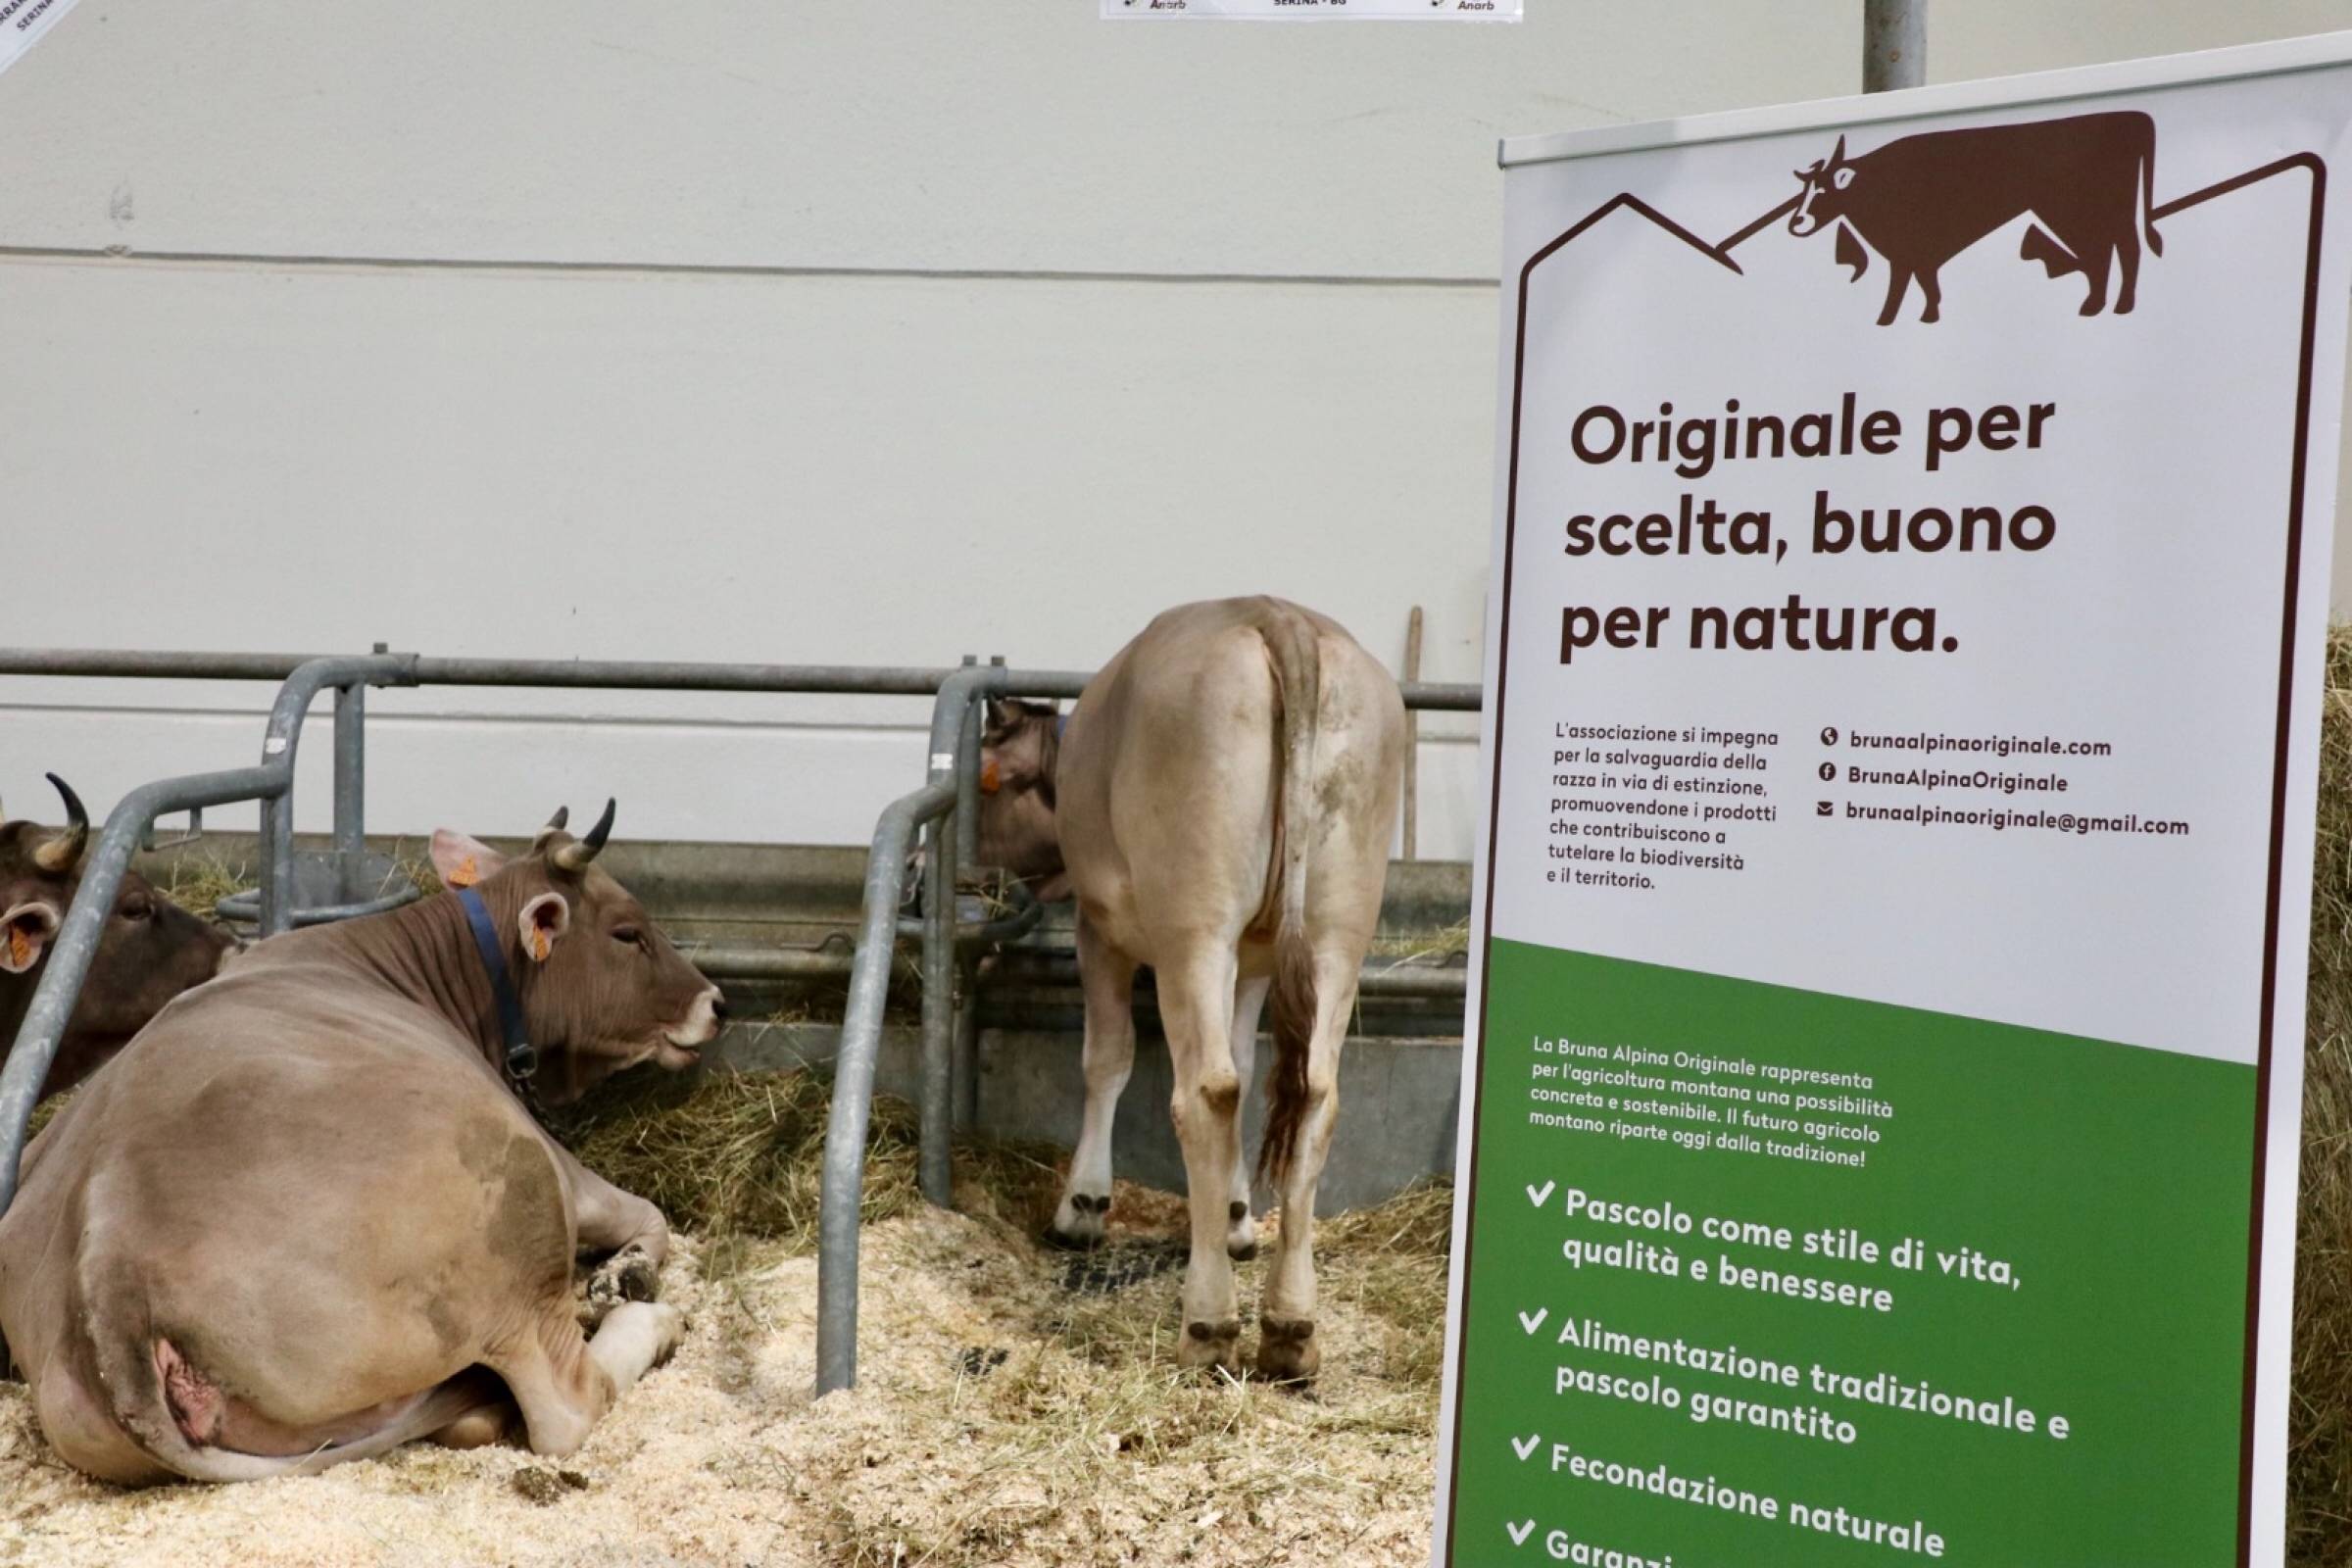 1st Presentation of the Original Brown Cow in Verona city